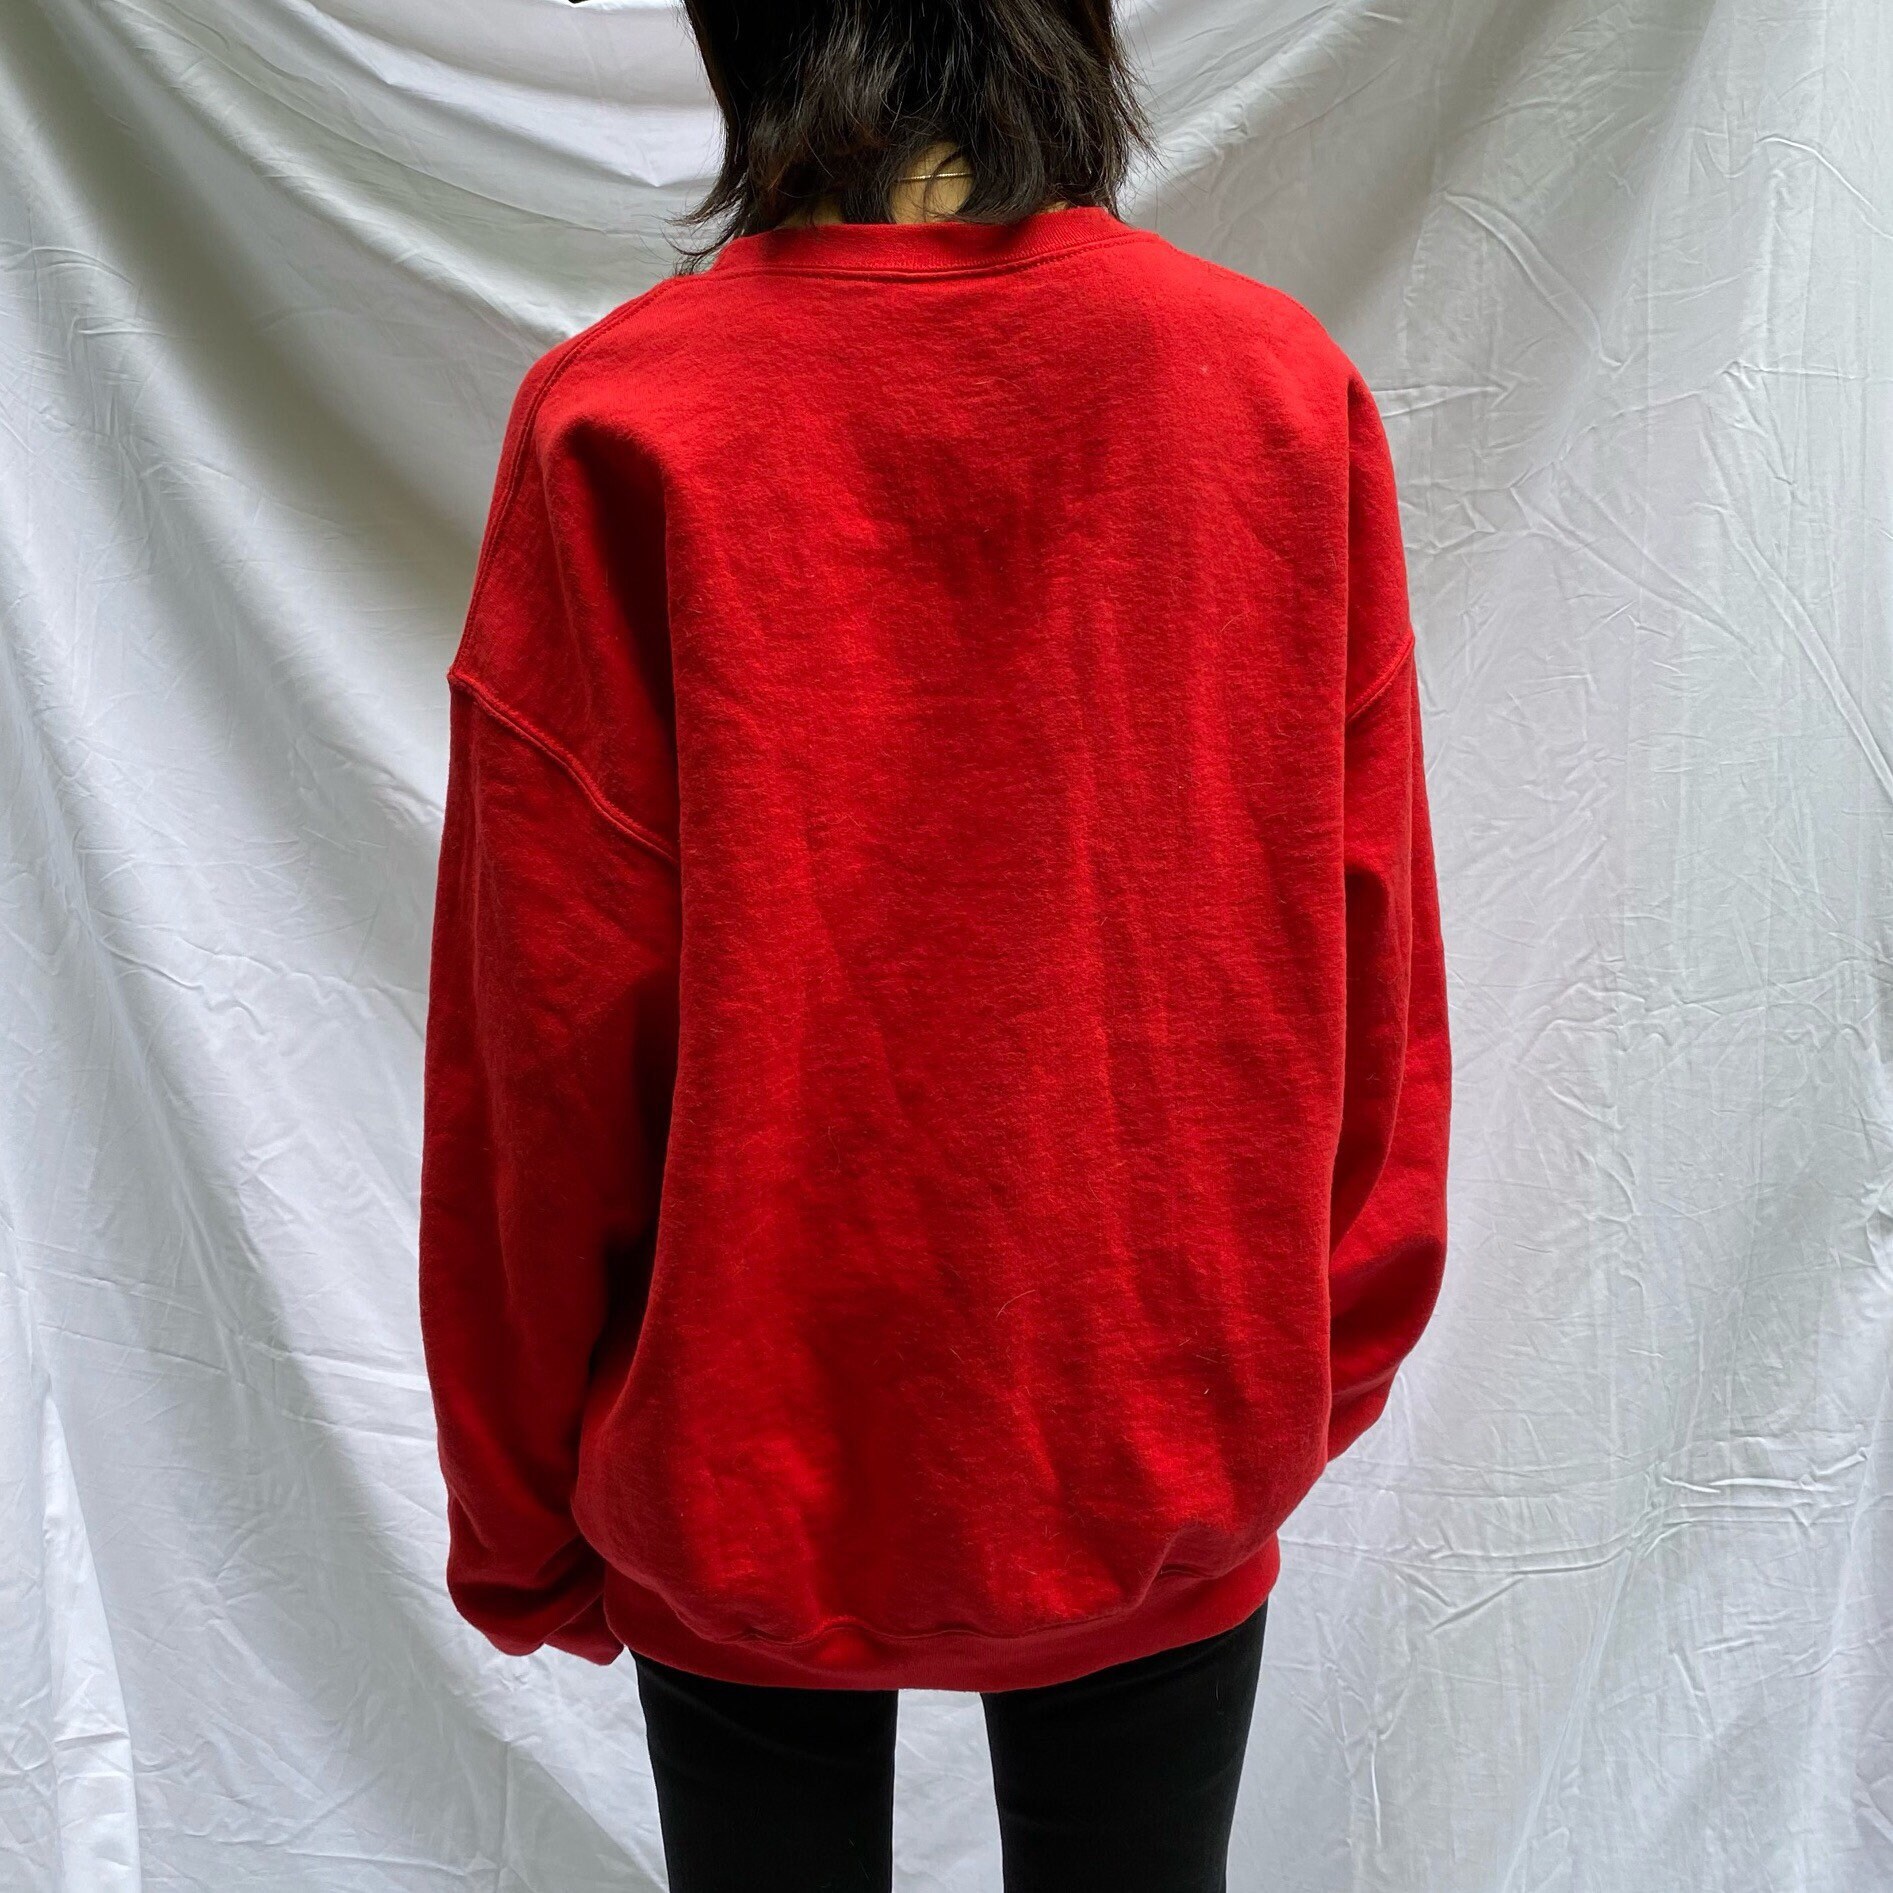 Vintage red graphic sweatshirt | Etsy